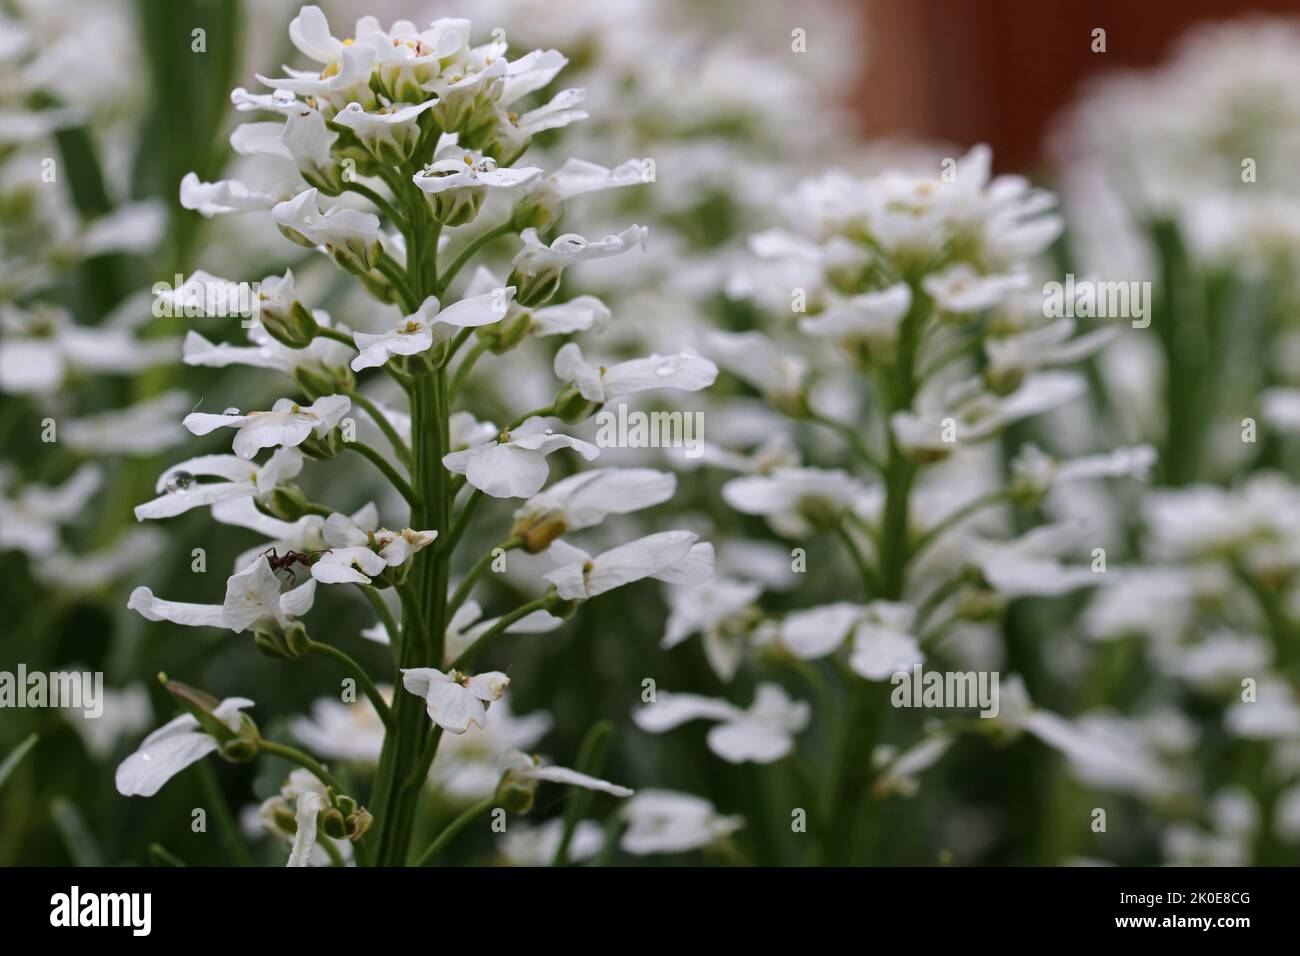 White flower Iberis after the rain. Candytuft (Iberis amara - Iberis sempervirens, multiple flowers) Stock Photo